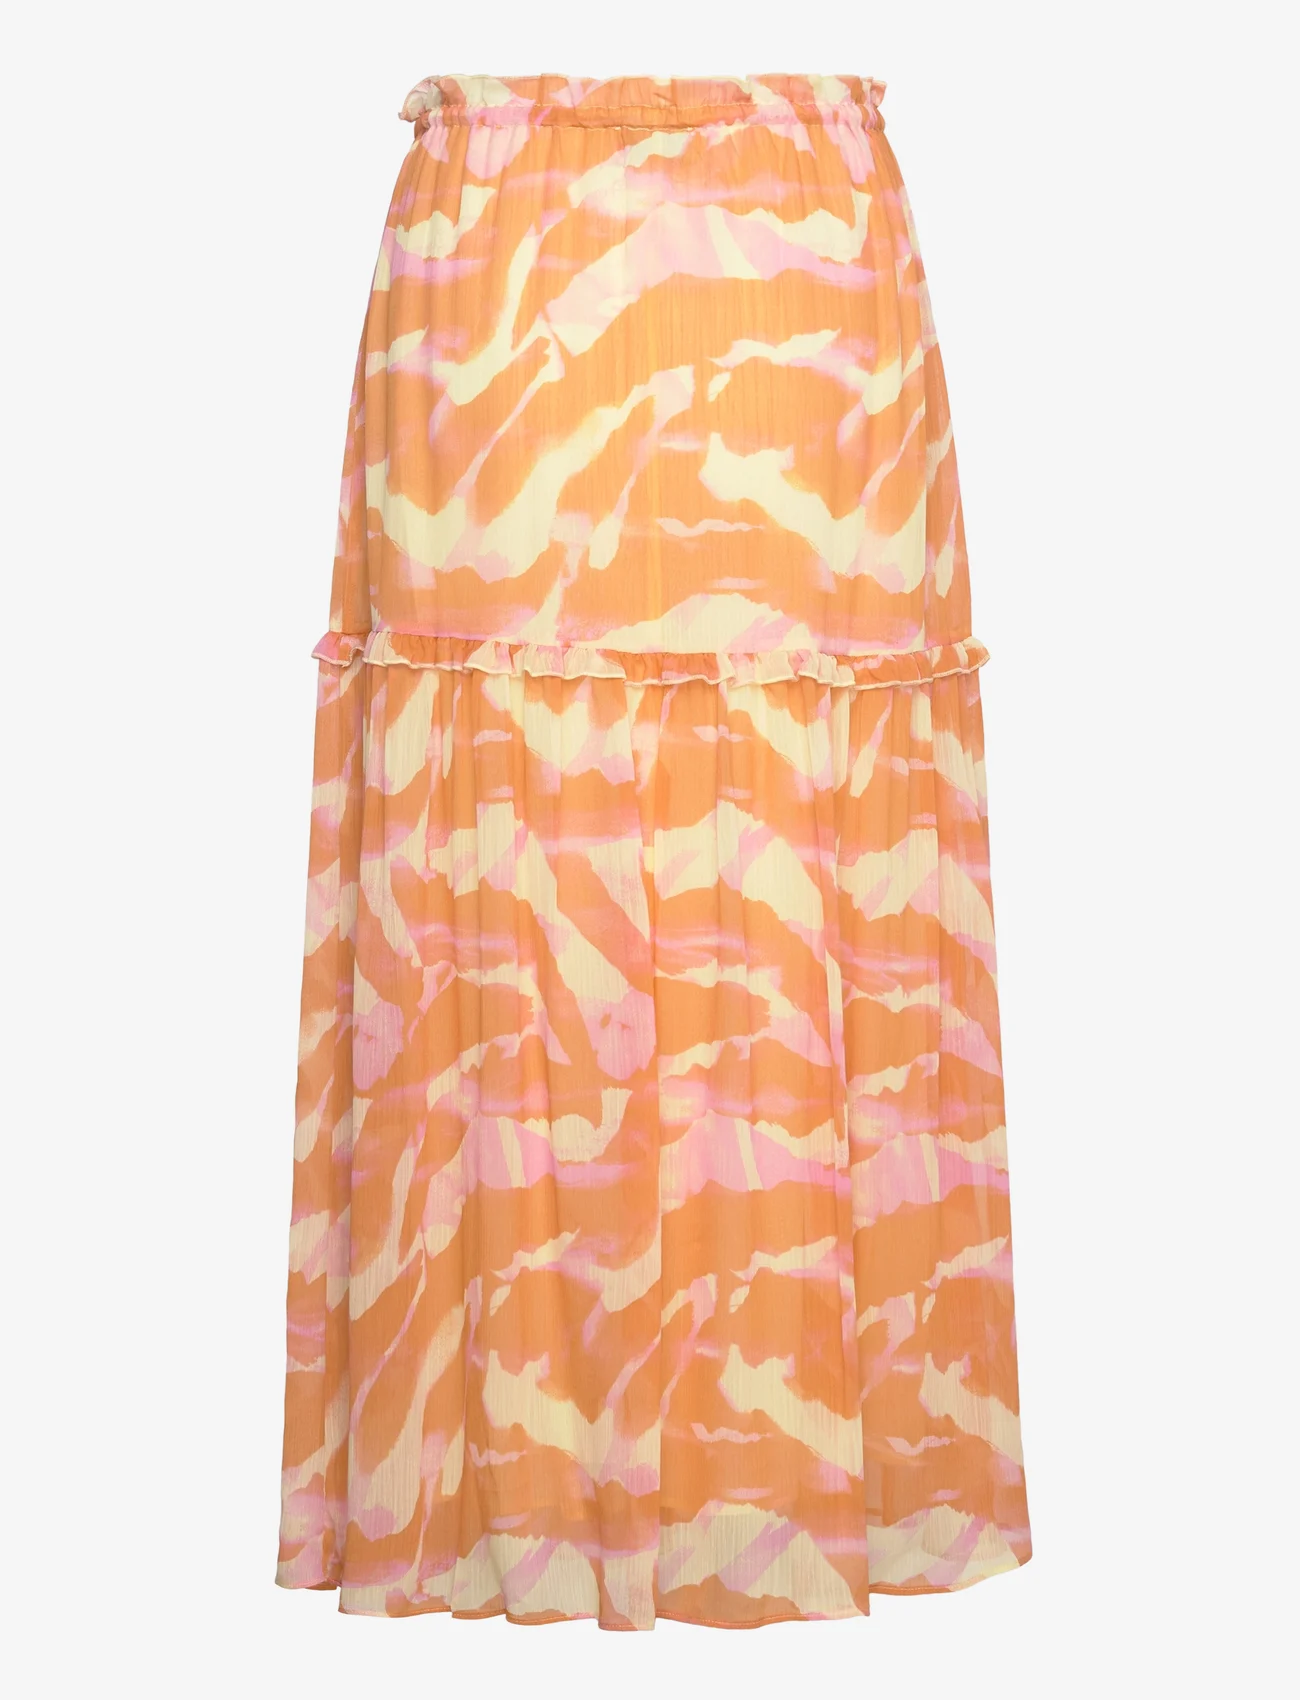 Rosemunde - Recycled chiffon skirt - maxi röcke - orange abstract art print - 1